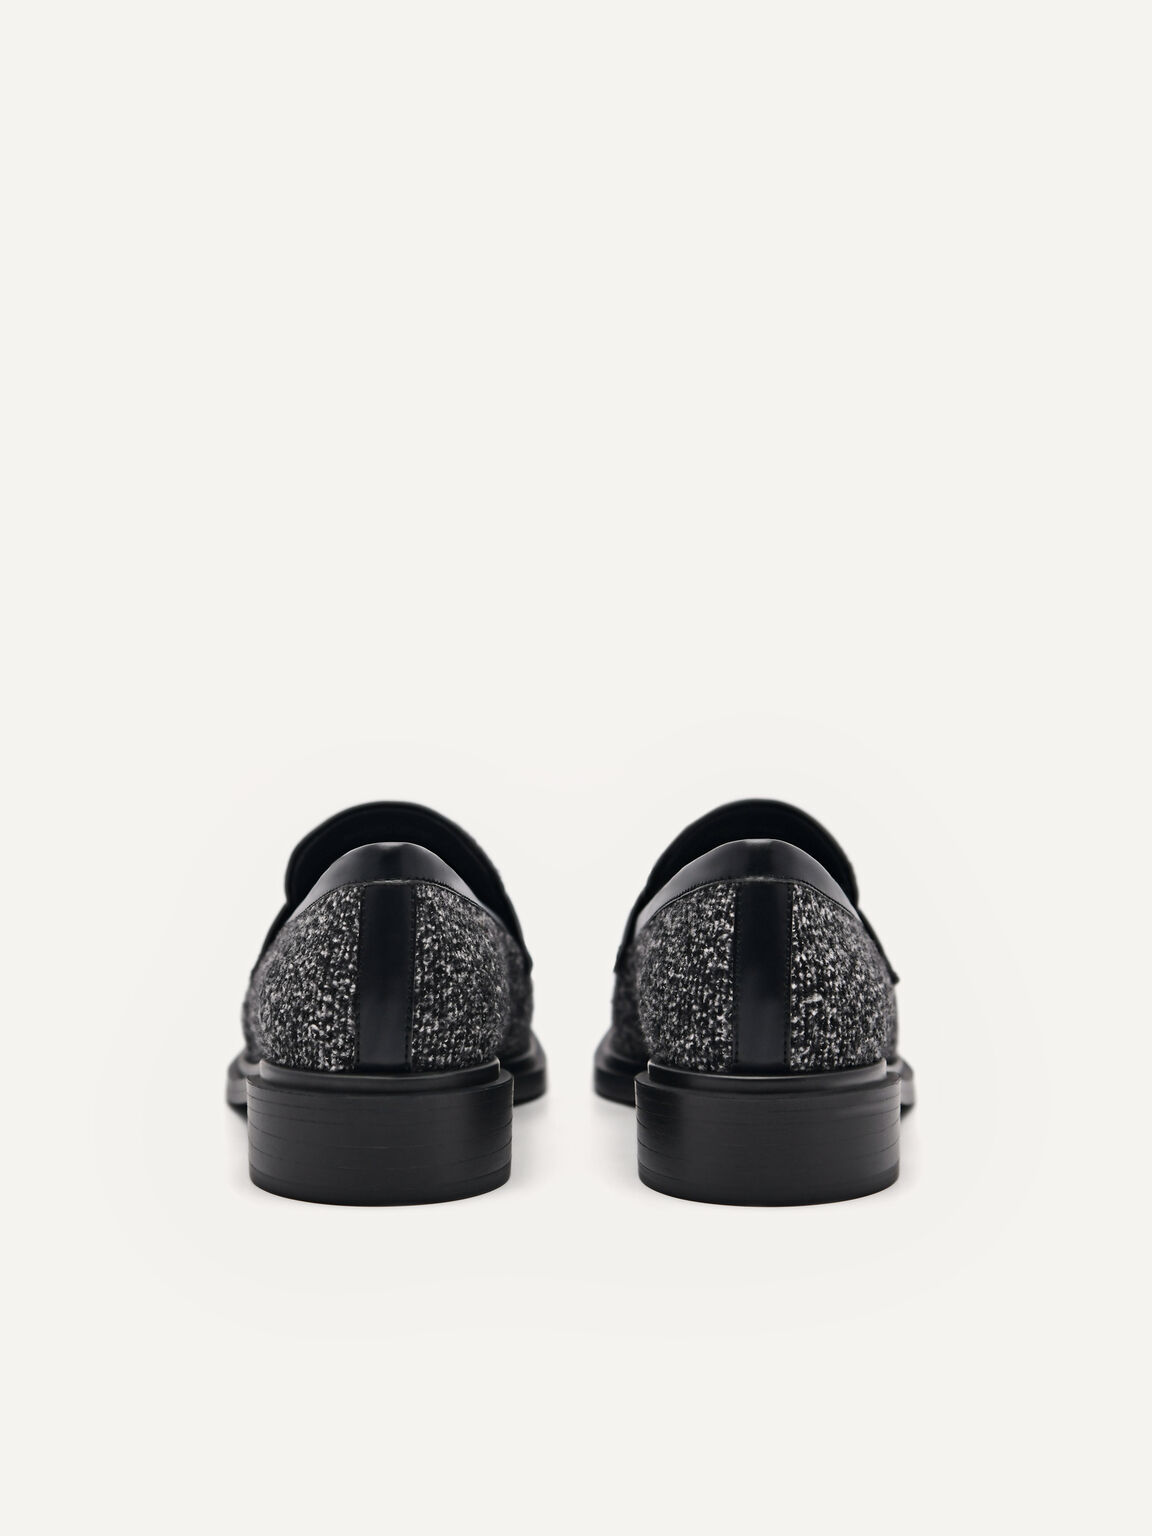 Orb Loafers, Black